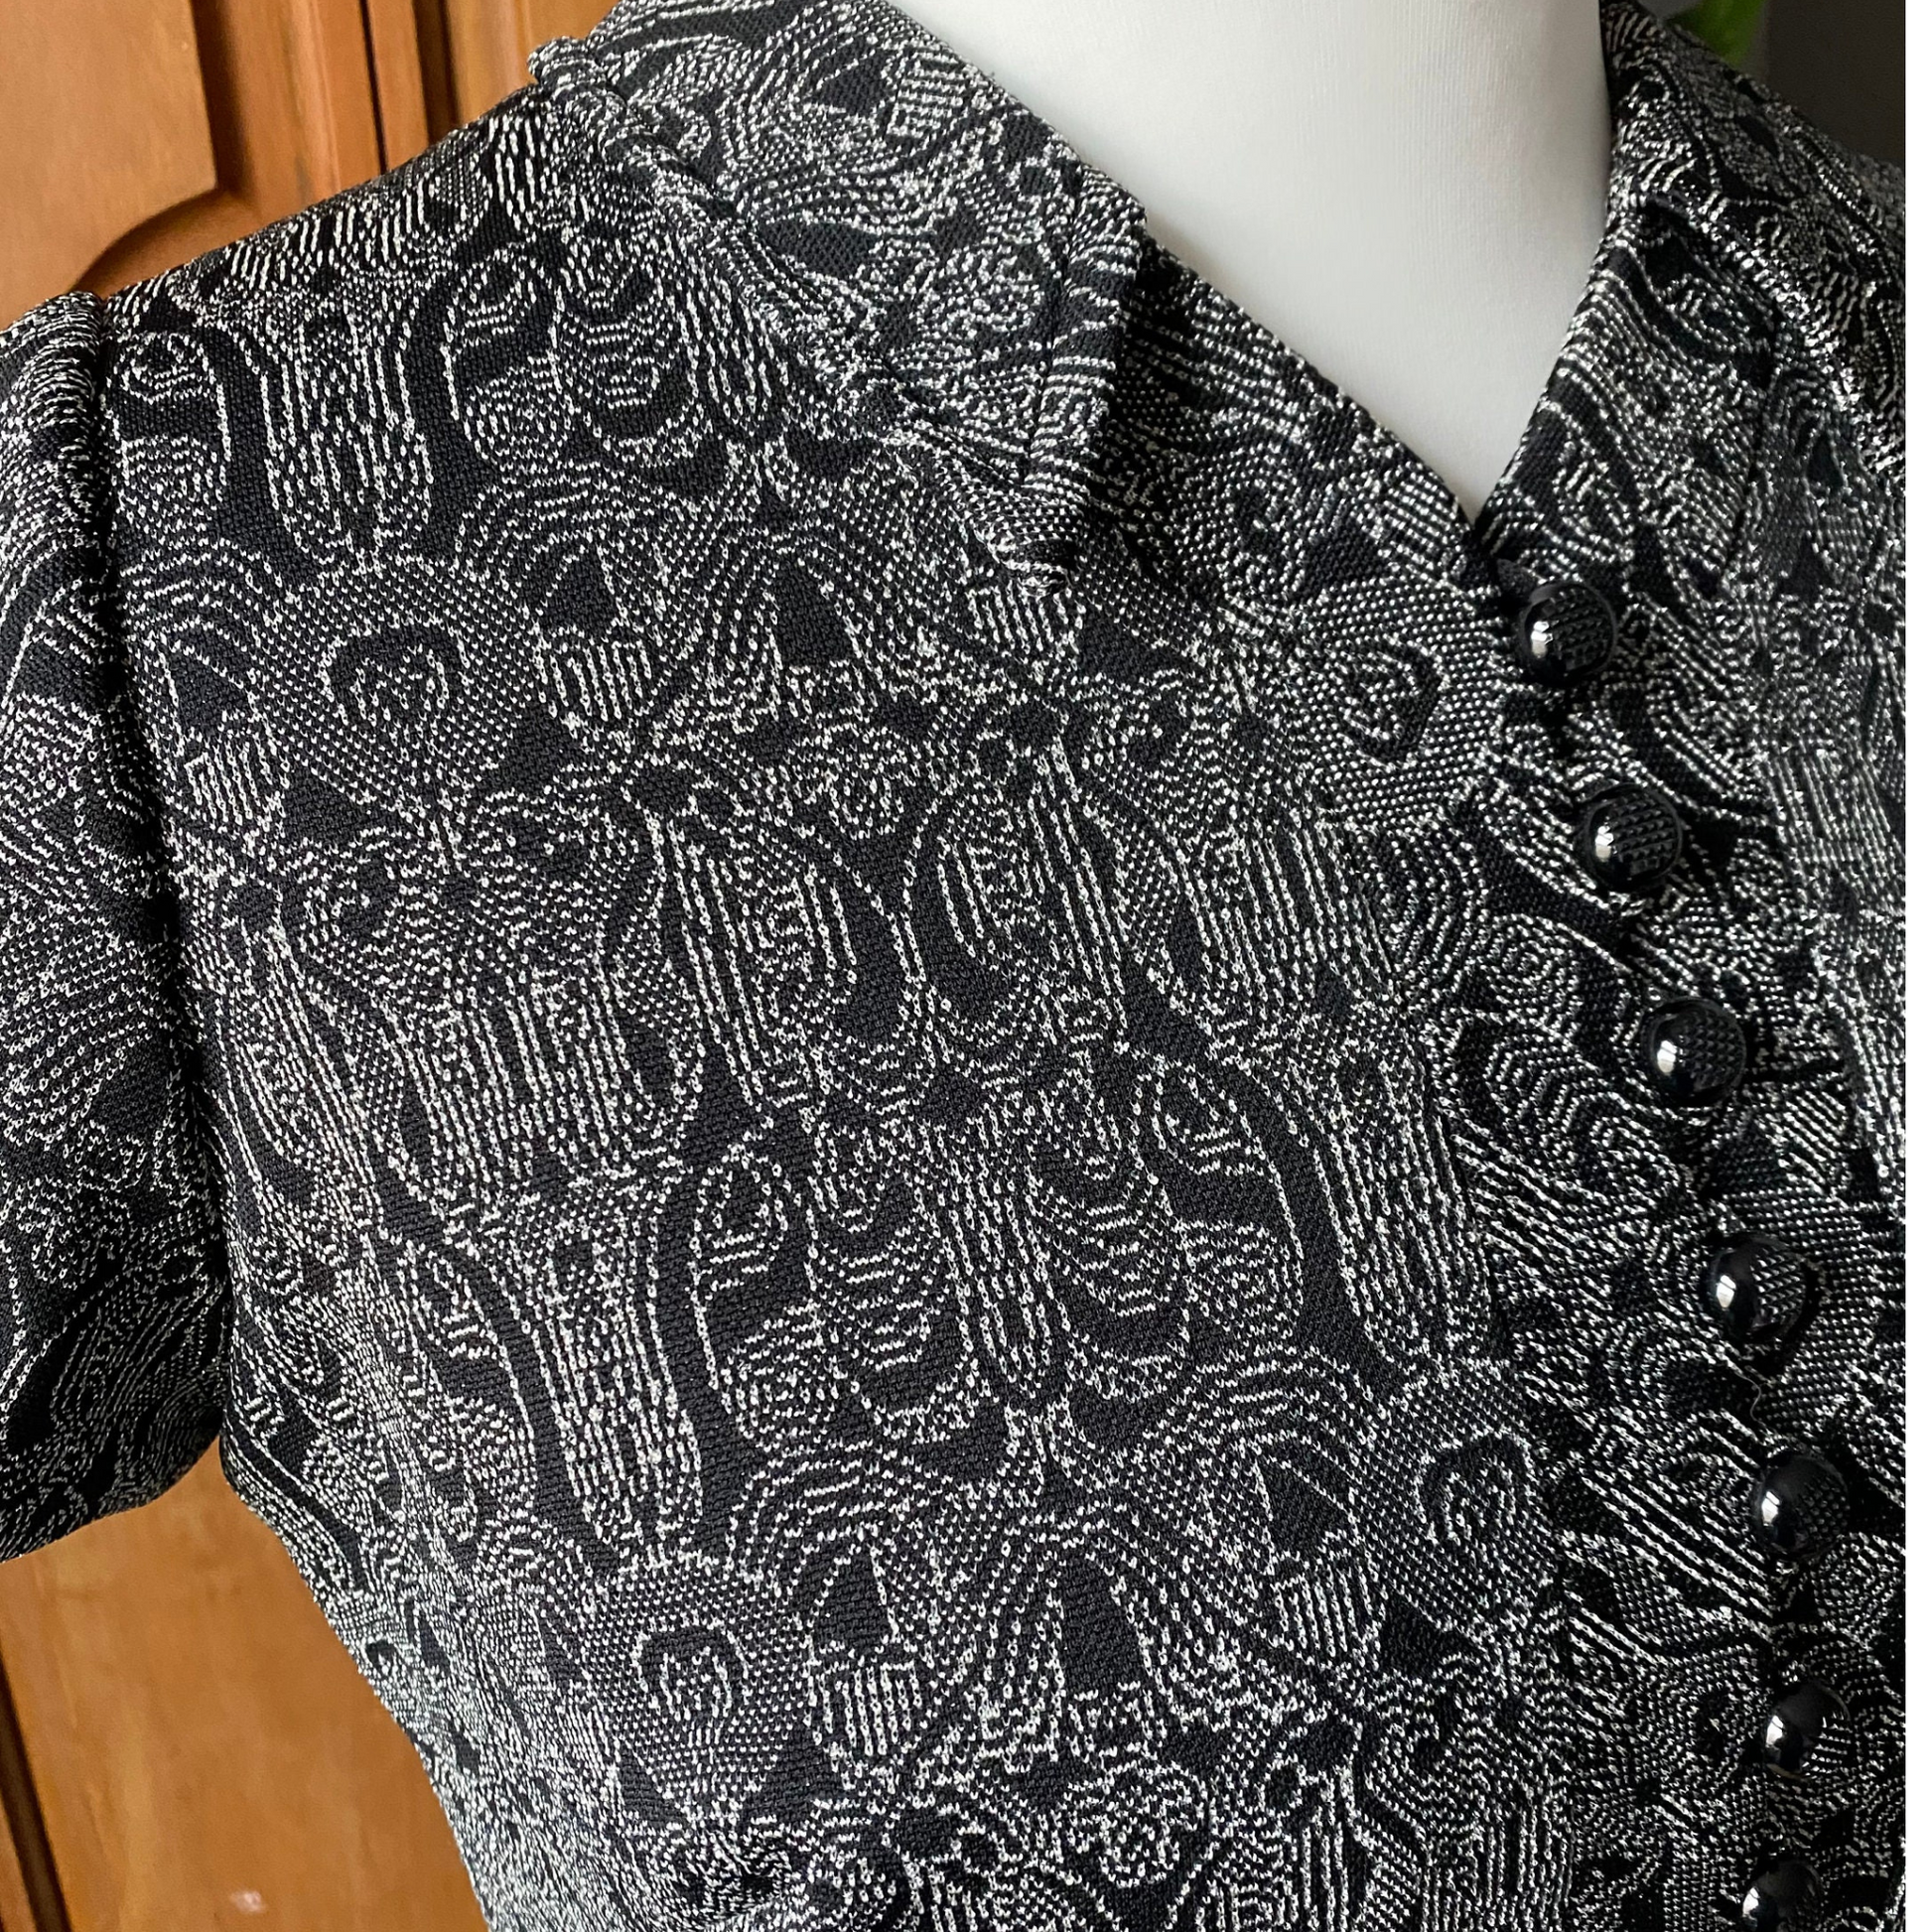 Stylish 60s black mod dress with silver sparkle detail. Black button close up 